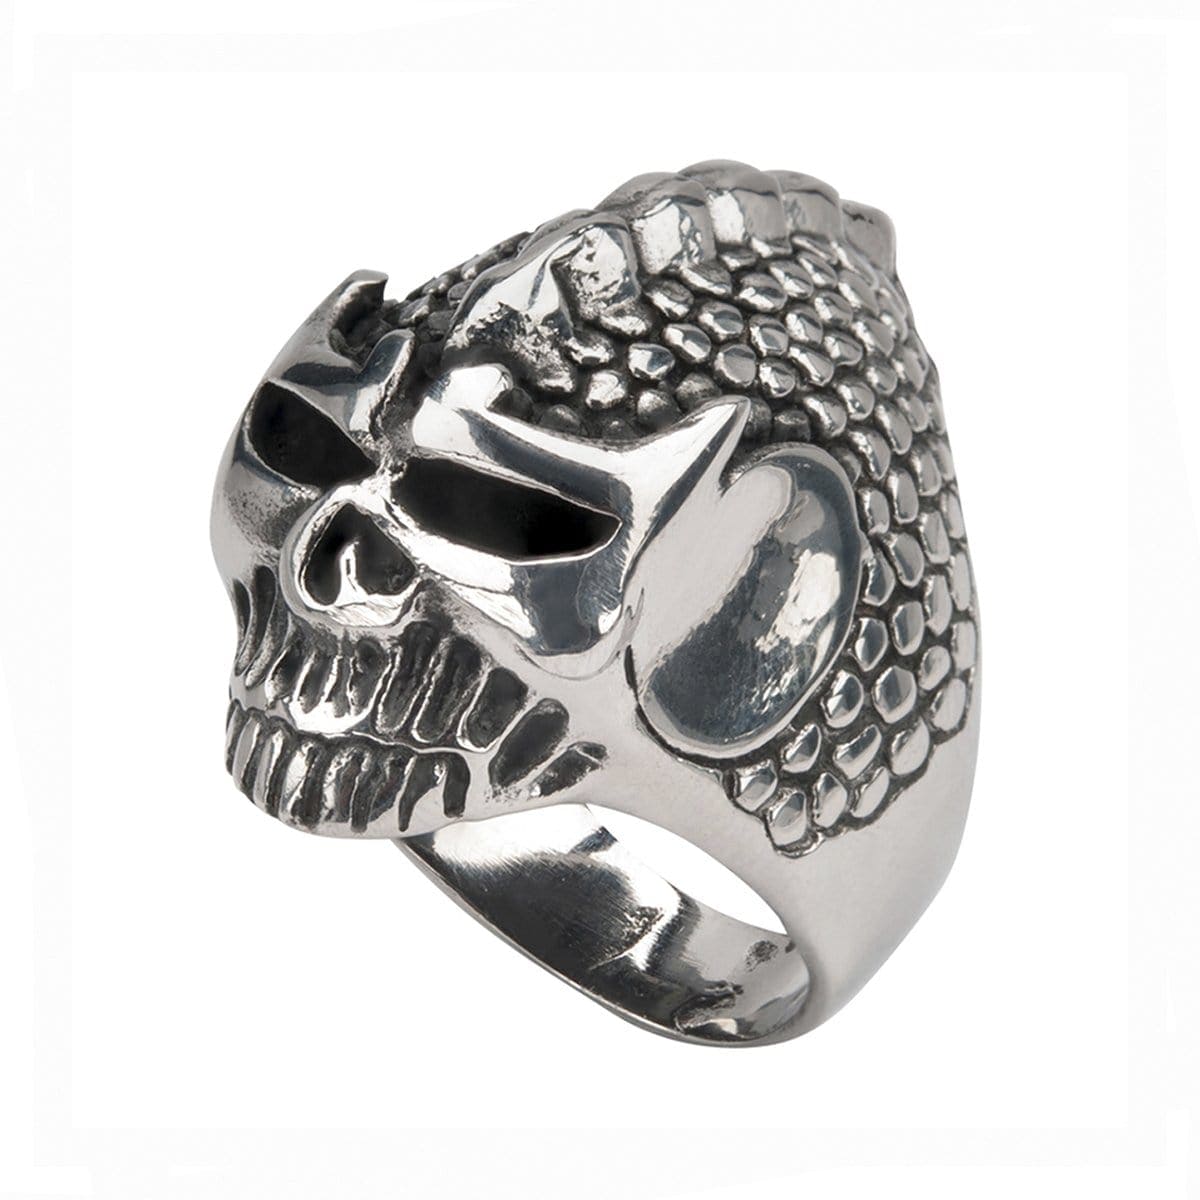 INOX JEWELRY Rings Antiqued Silver Tone Stainless Steel Alien Skull Ring